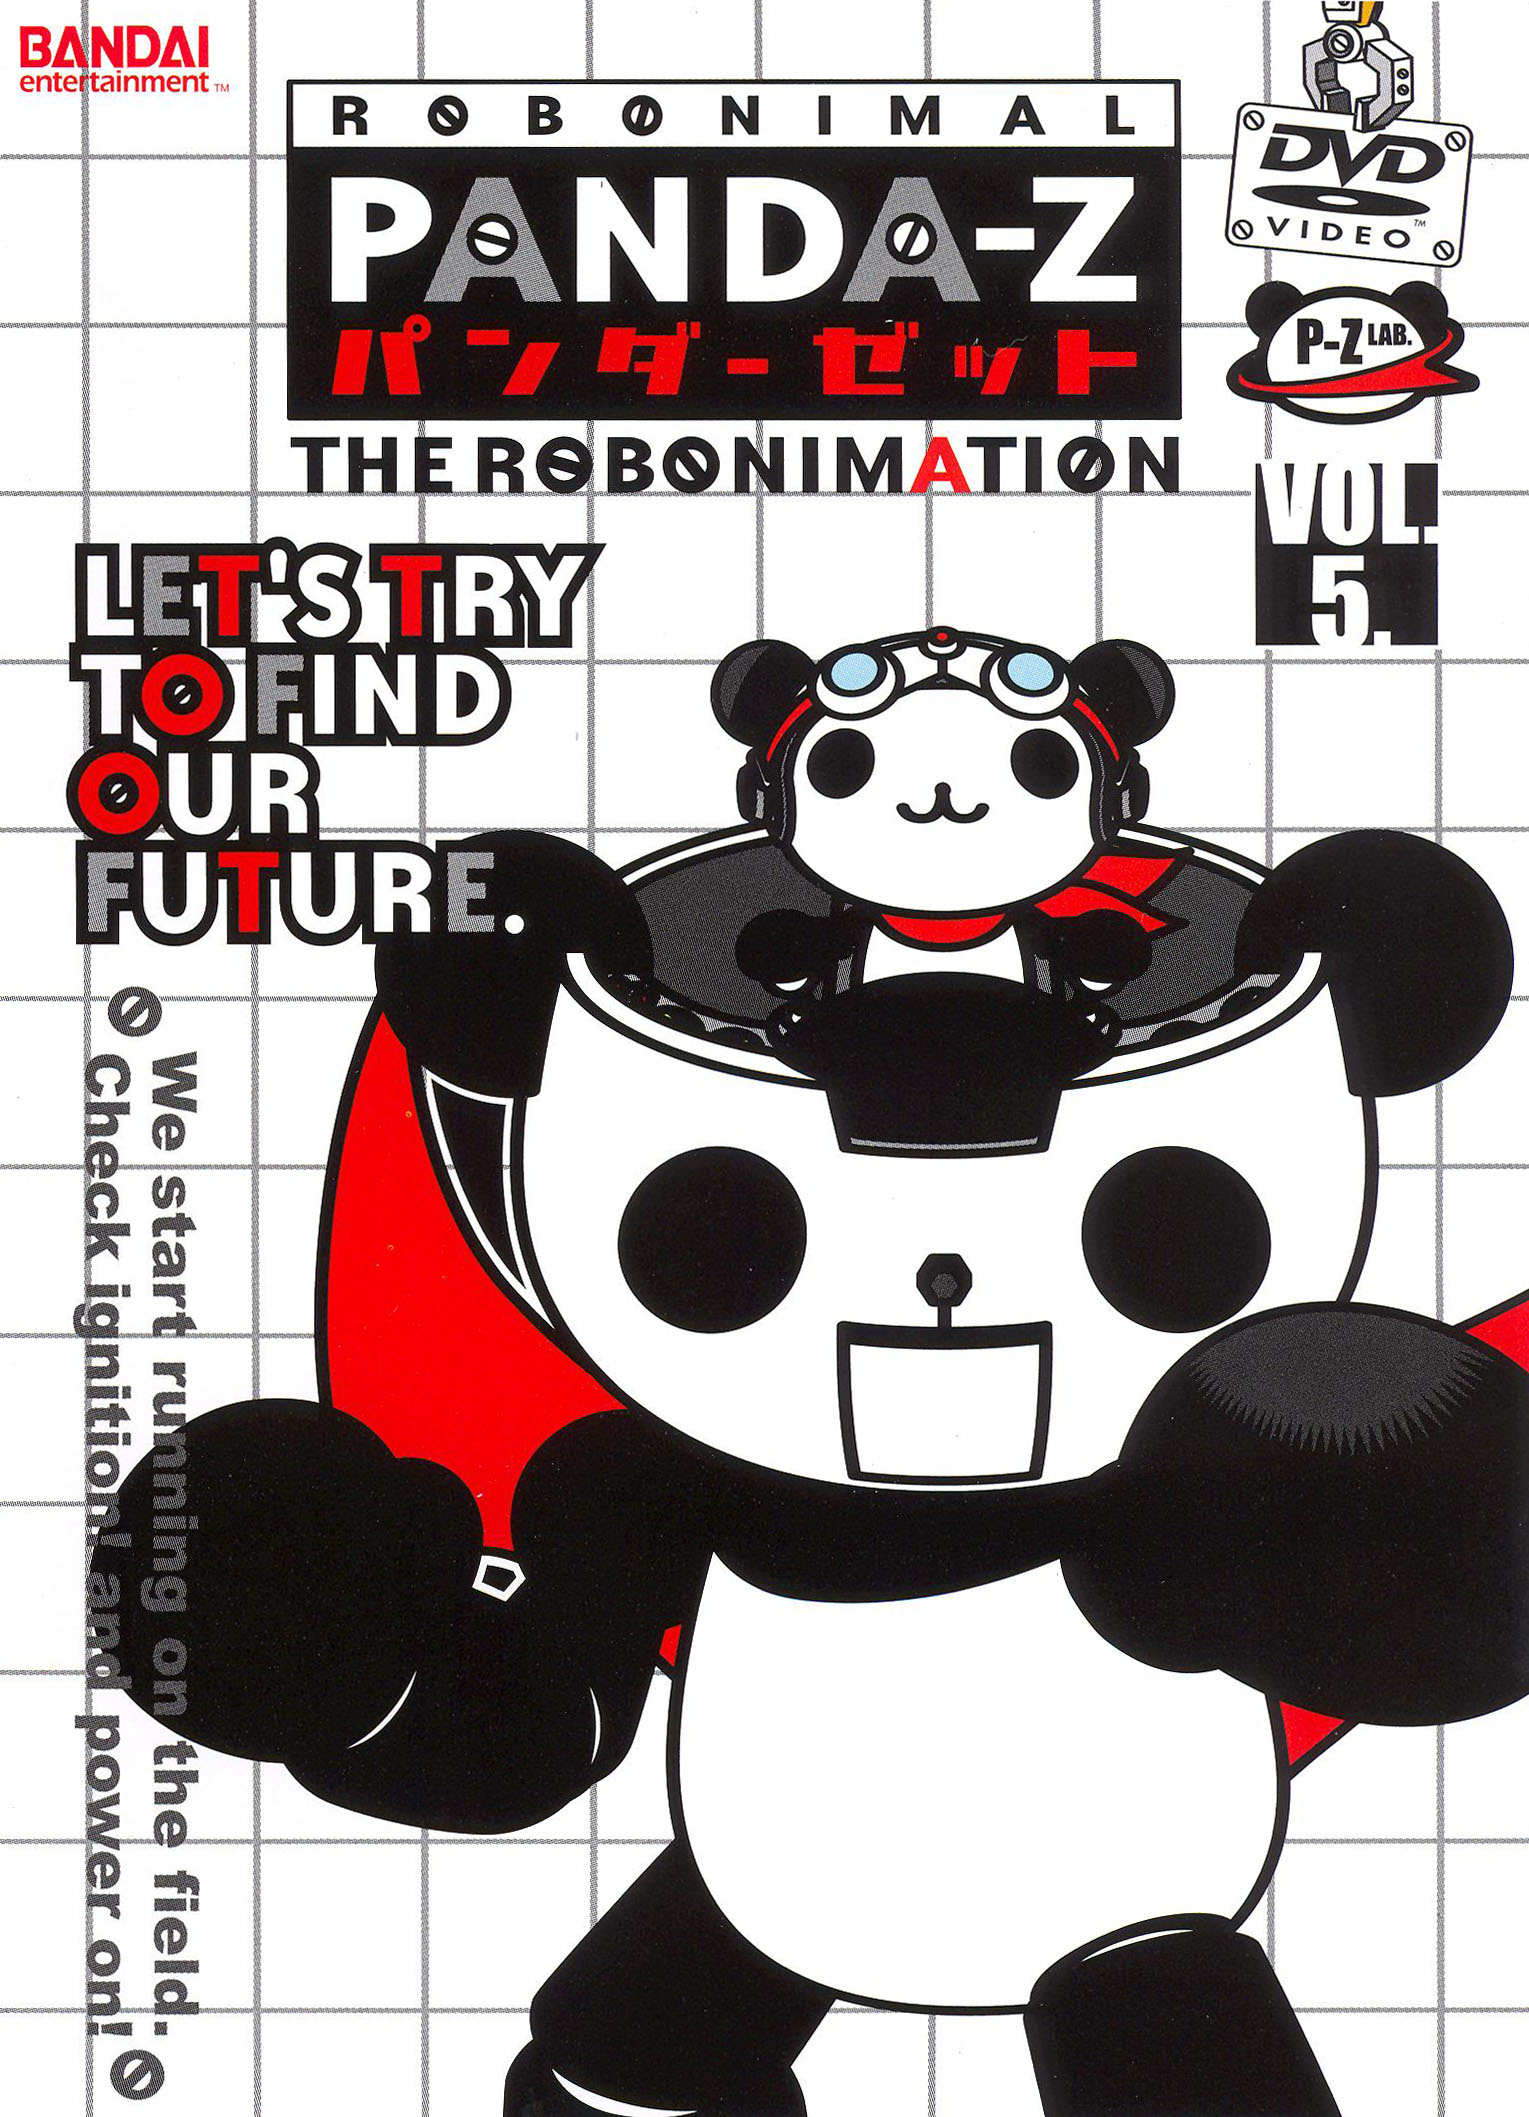 Best Buy: Panda-Z The Robonimation, Vol. 5 [DVD]